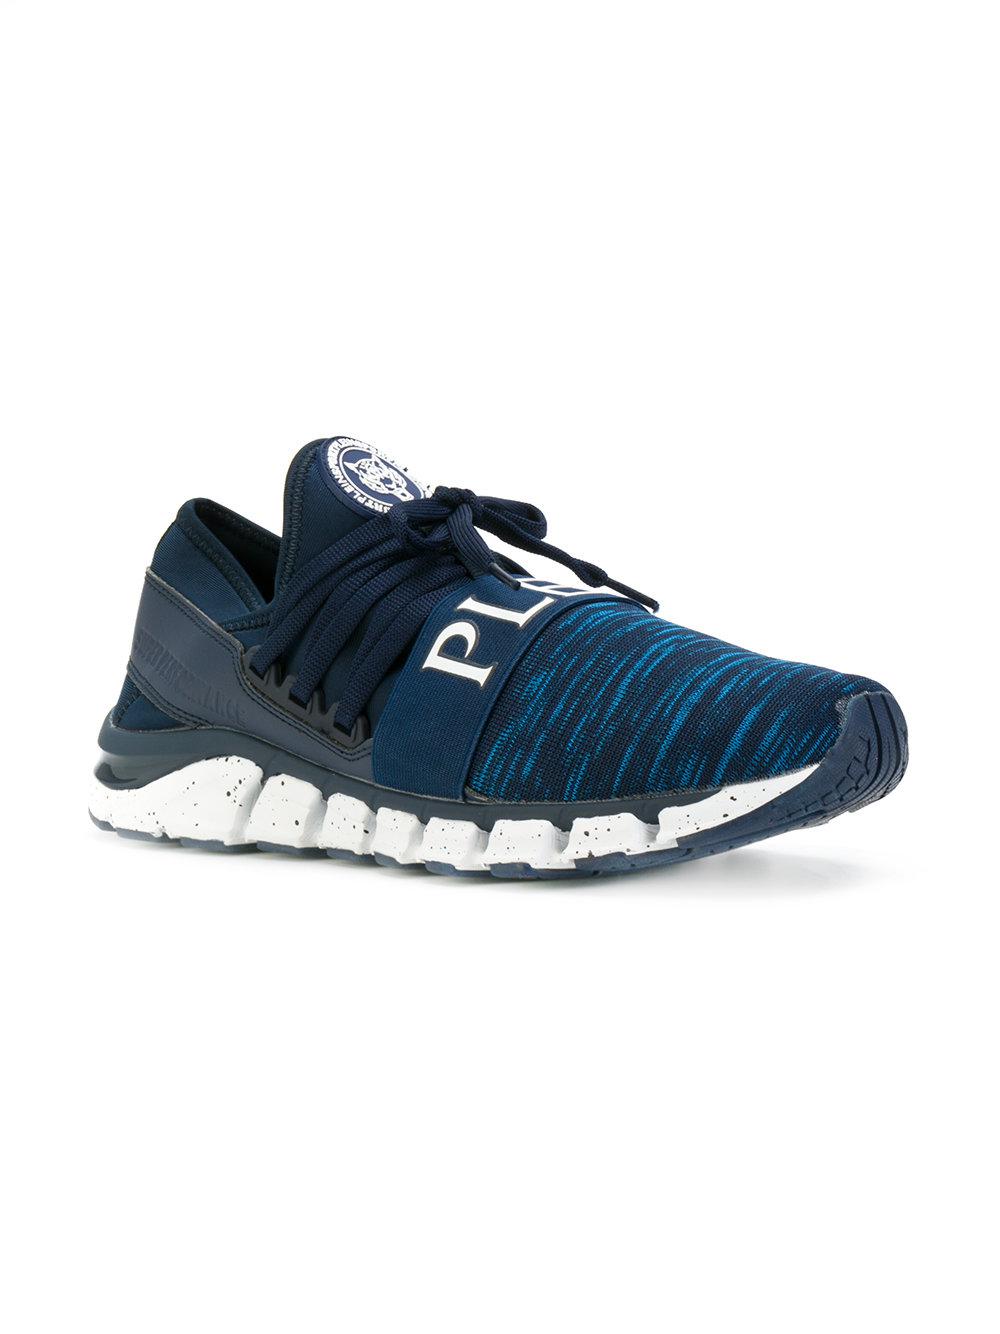 Lyst - Philipp Plein Torpedo 78 Sneakers in Blue for Men